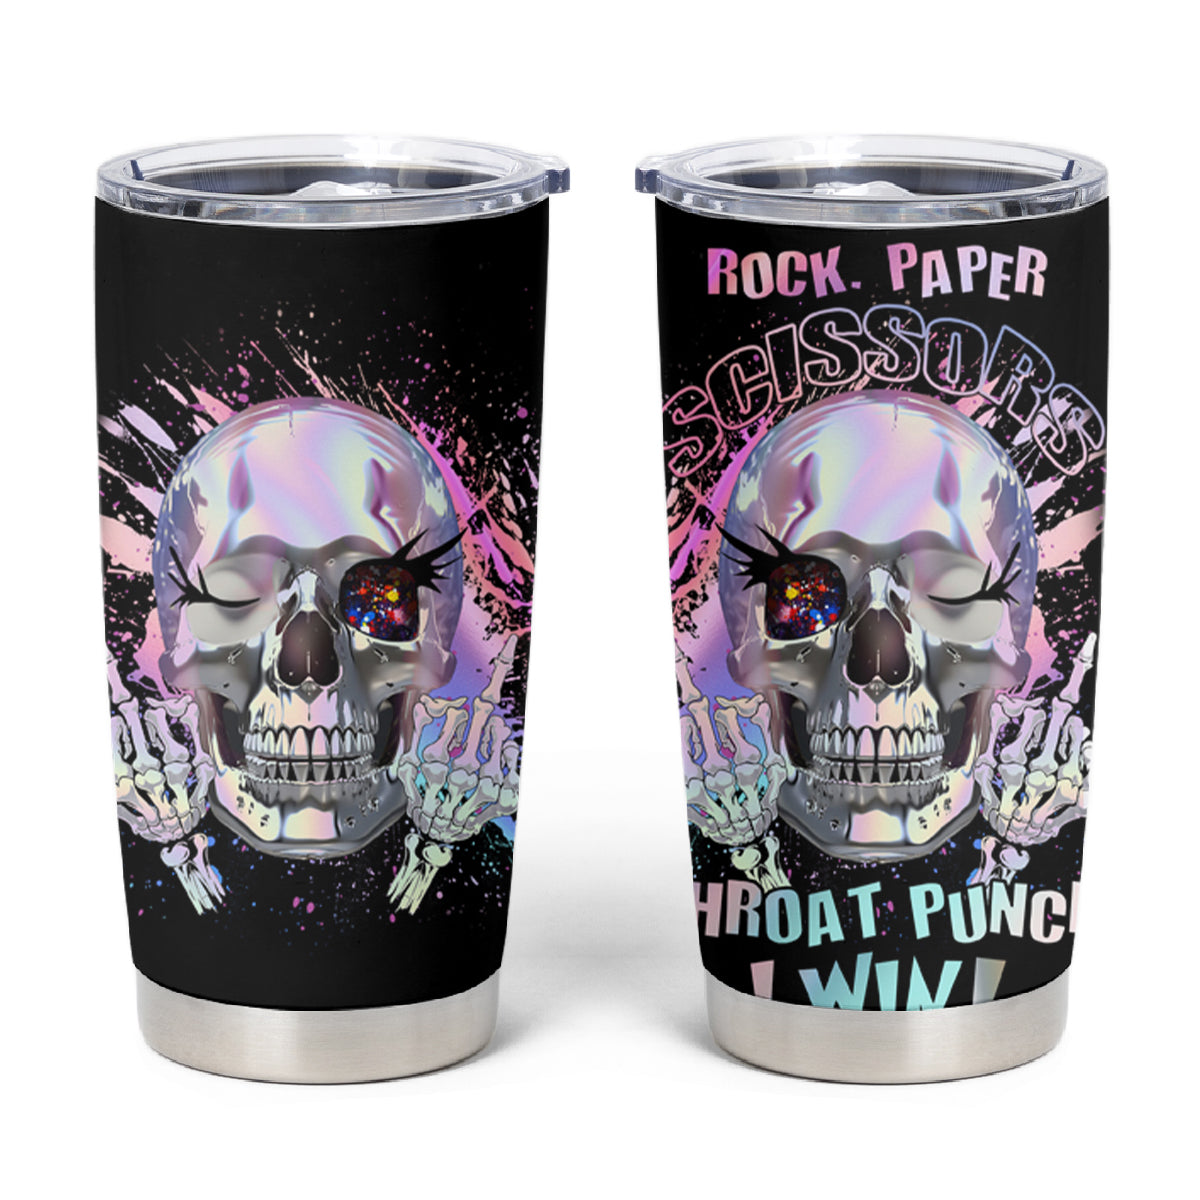 Rock Paper Throat Punch I Win Tumbler Cup